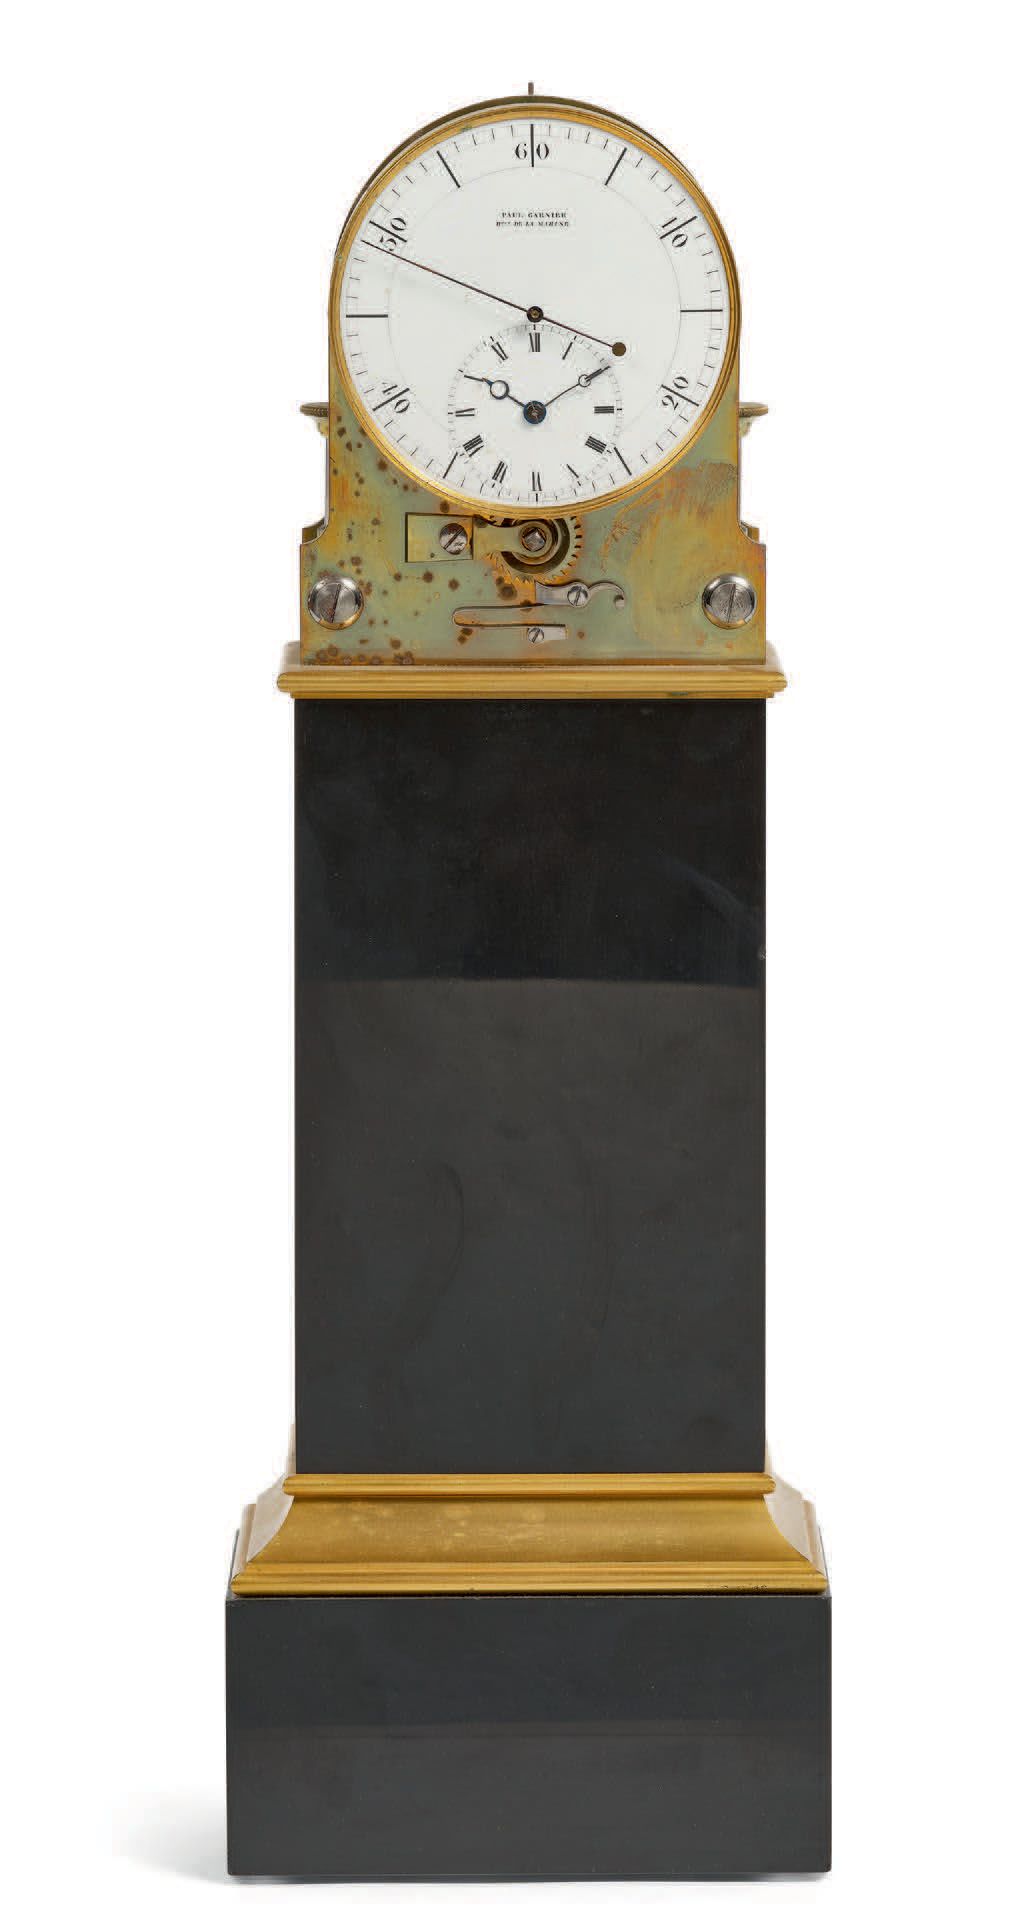 PAUL GARNIER, Horloger de la Marine - Milieu XIXe siècle 精密调节器的形式 
在终端的形式。黑色大理石底&hellip;